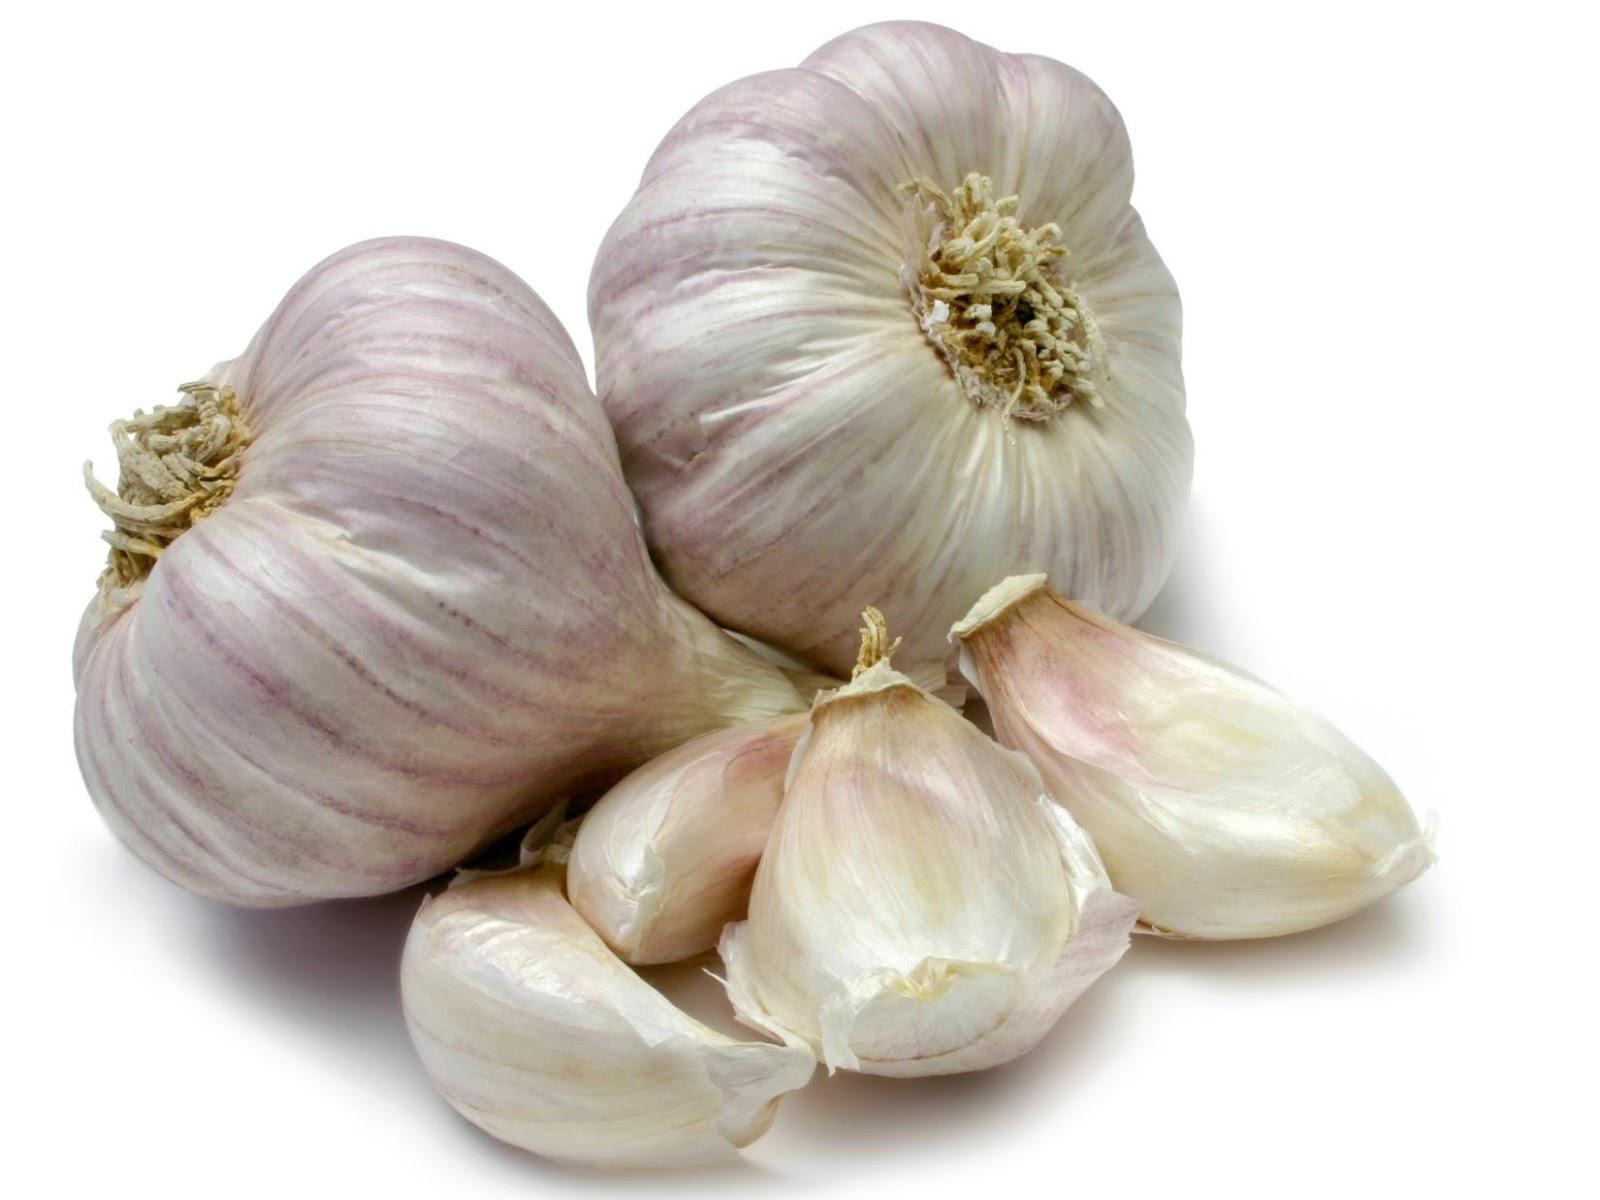 Bulb of Garlic